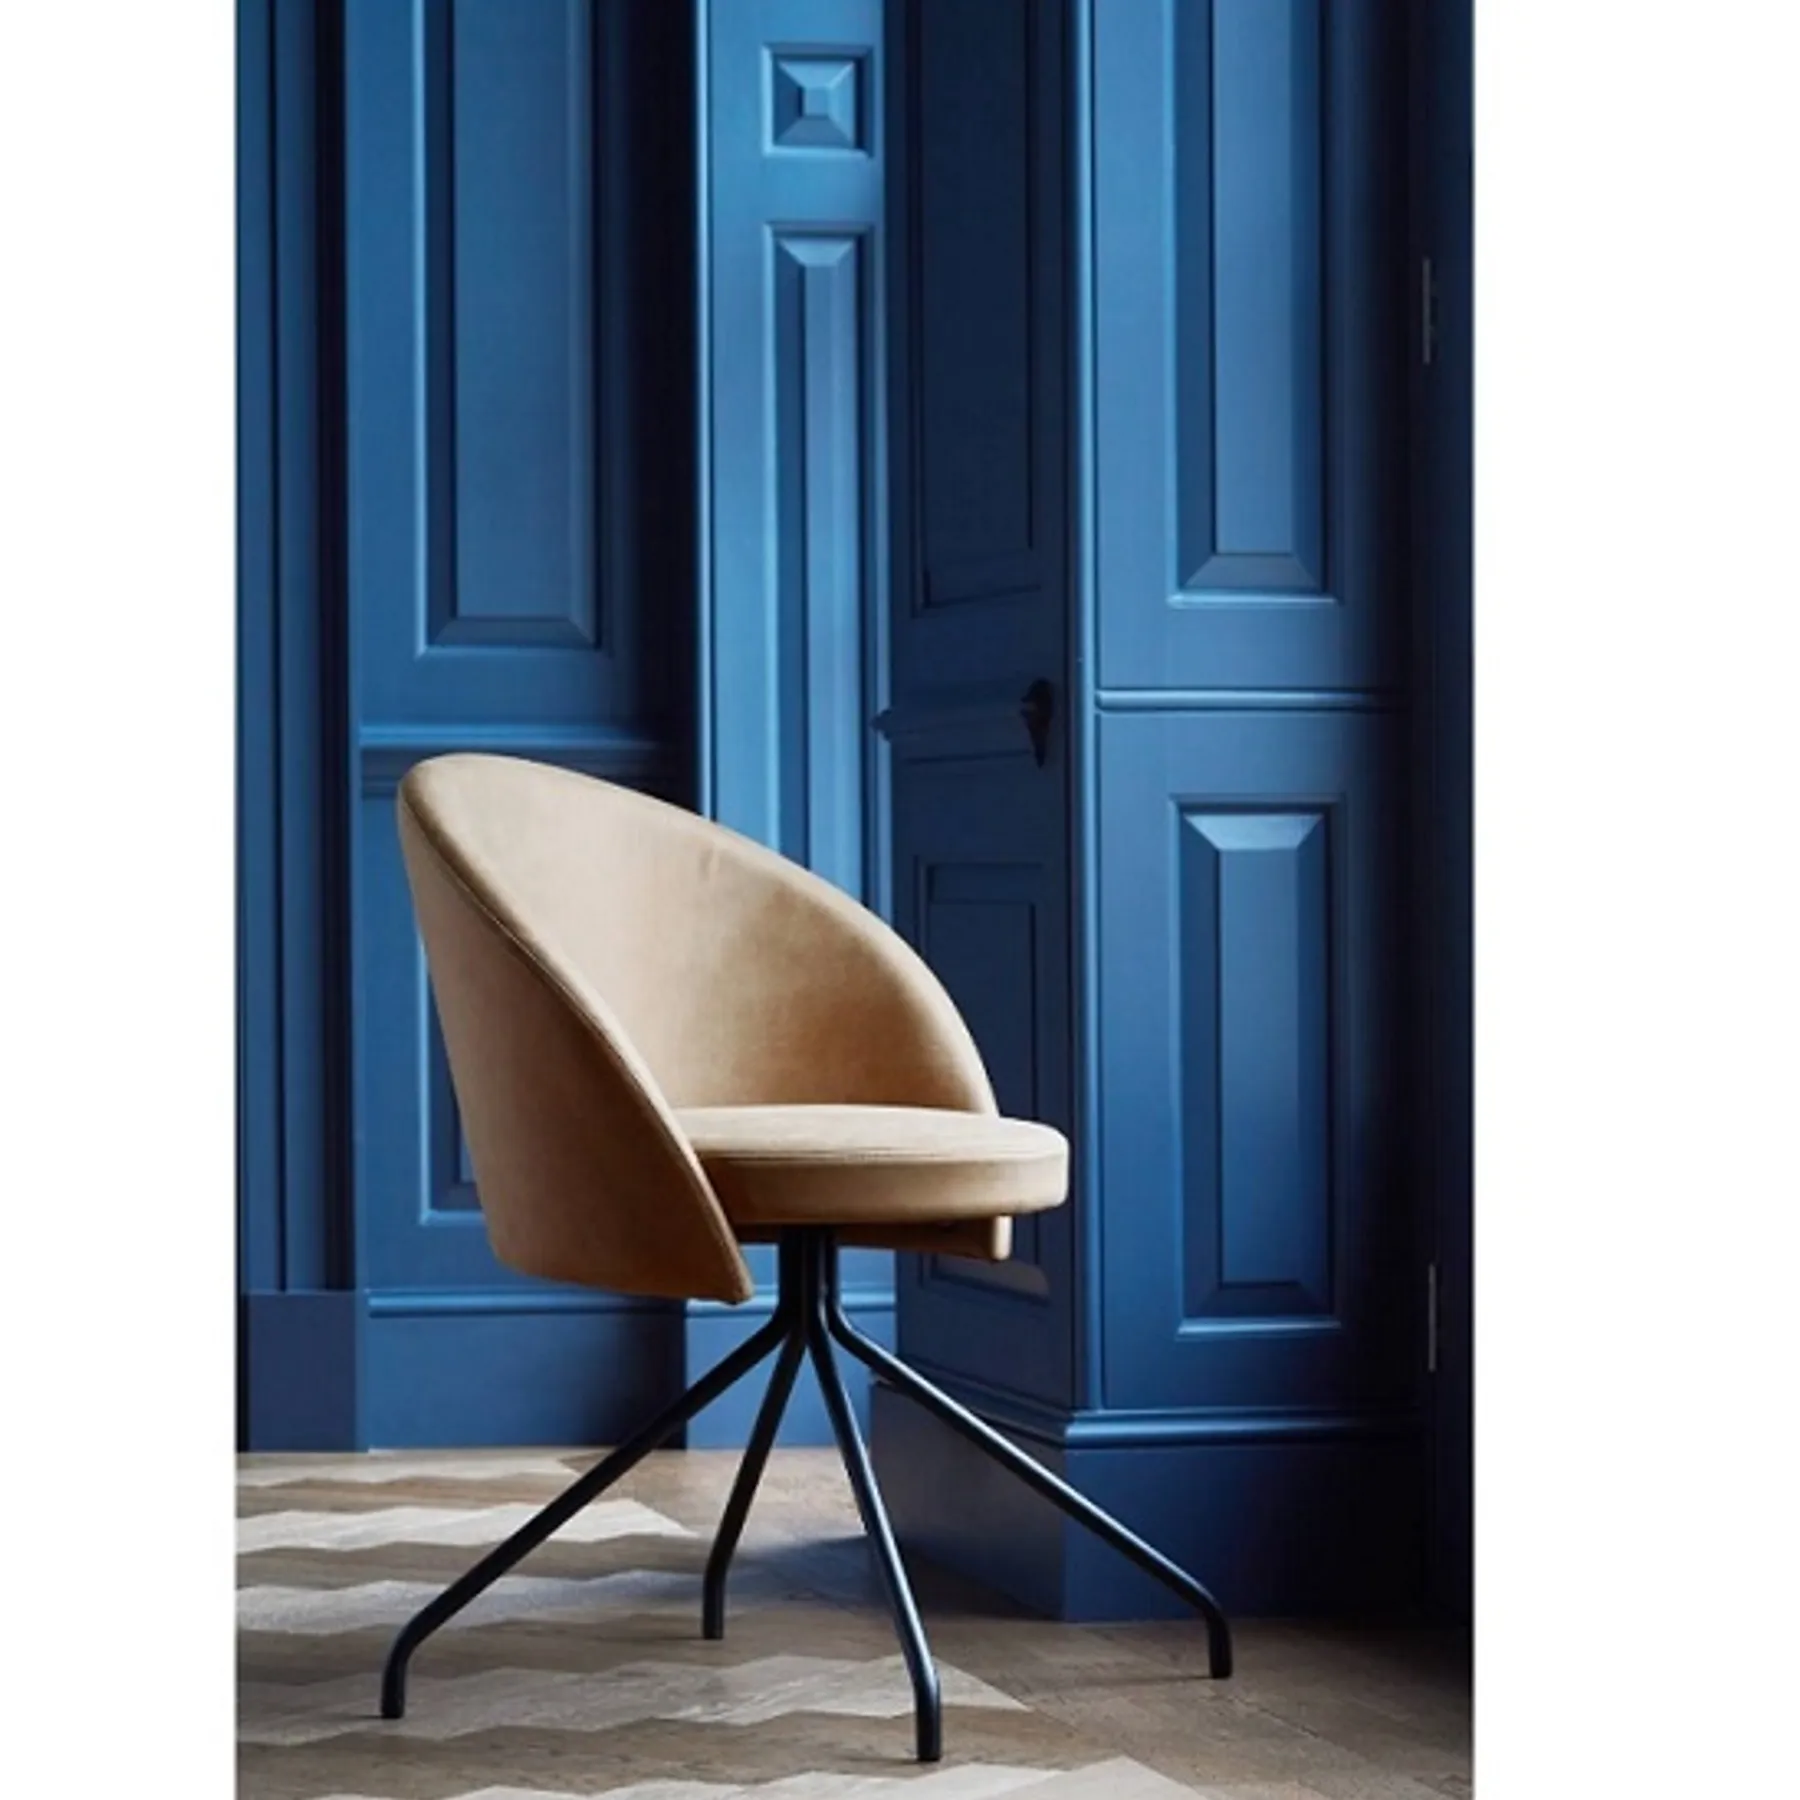 Lof Direct Giggle Chair ocee design venus black powder coated navy blue